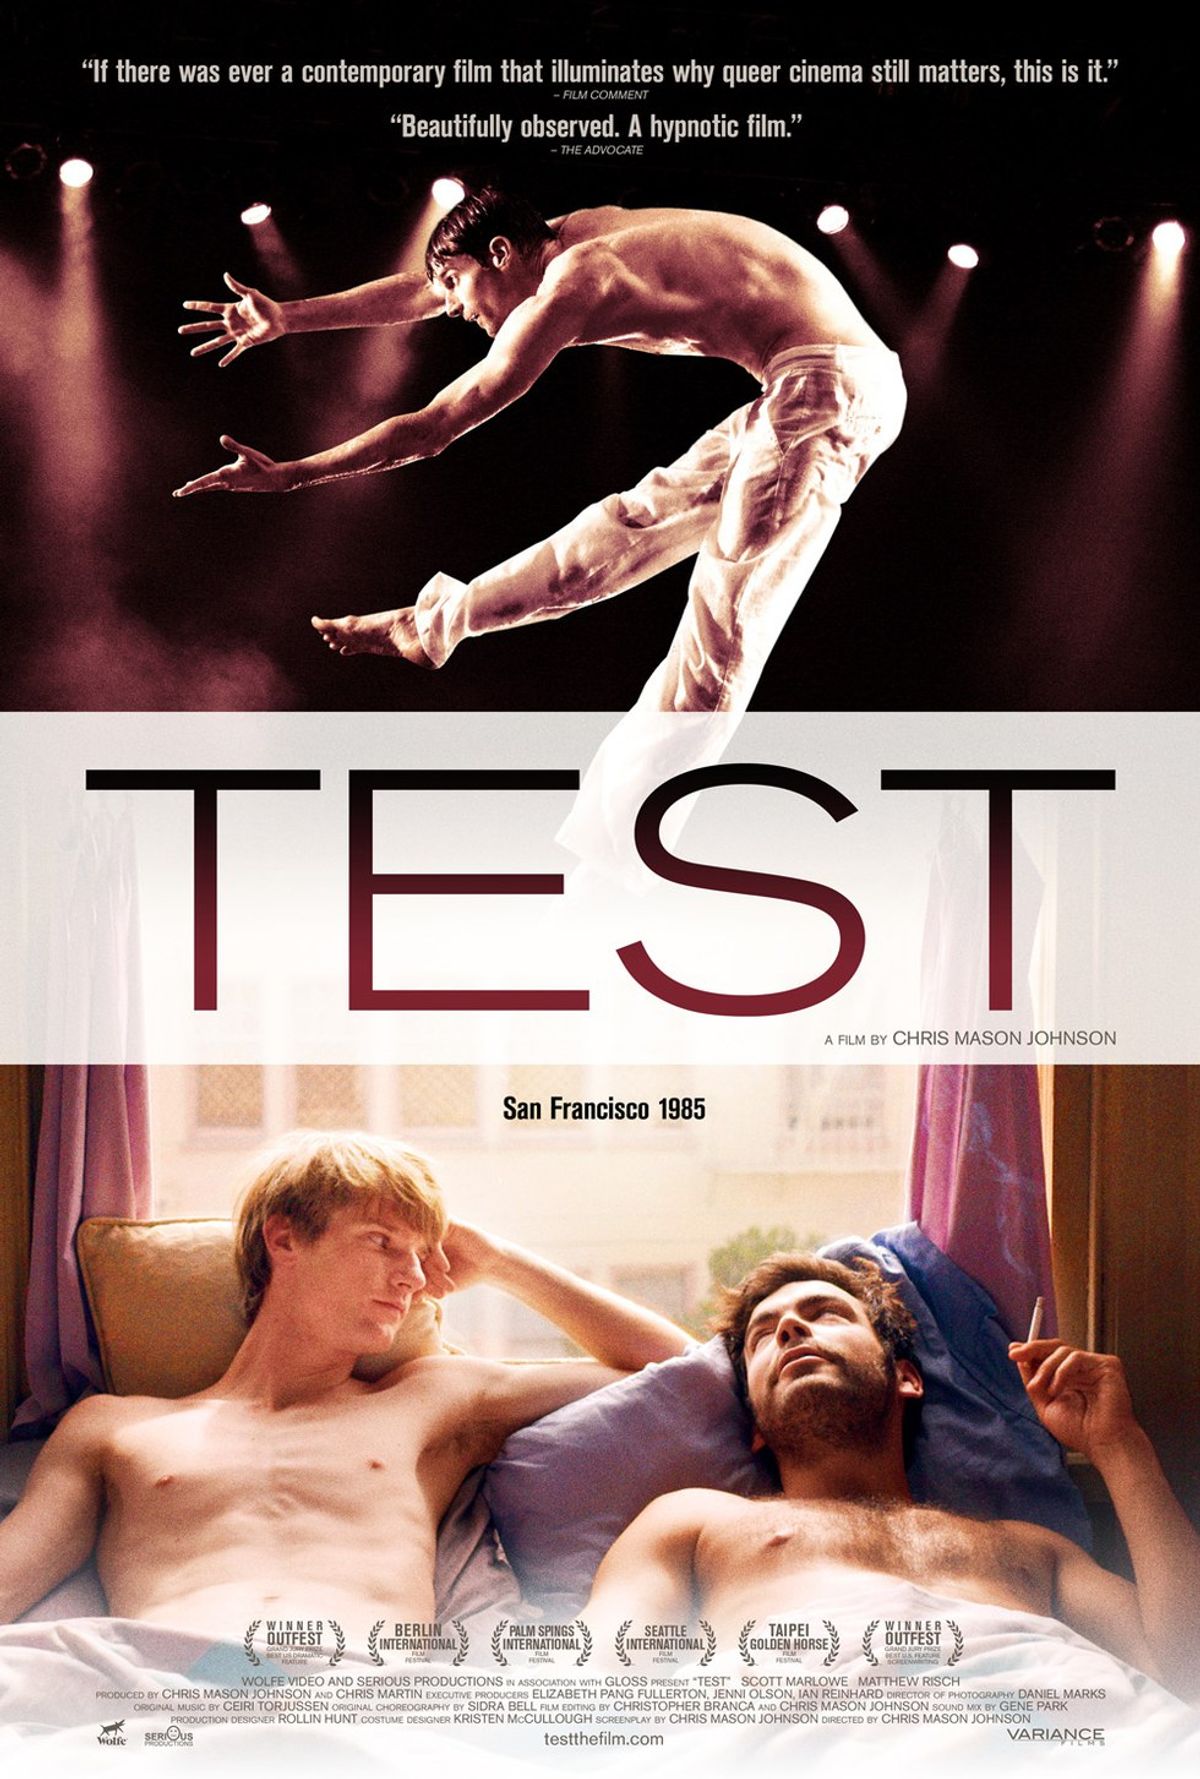 "TEST" As An AIDS Film